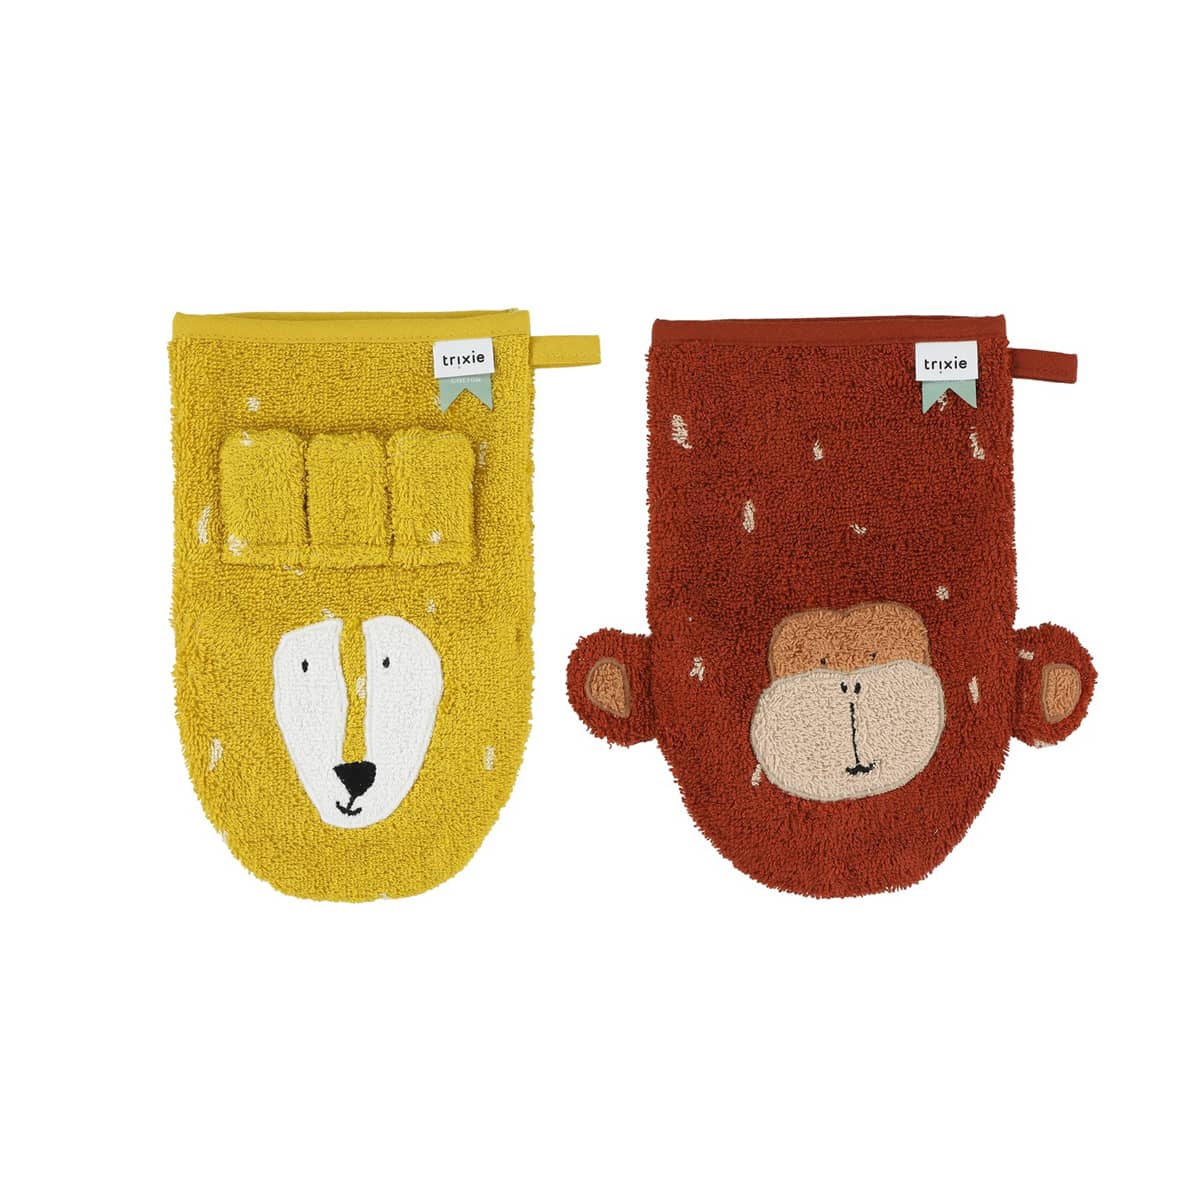 Trixie Organic Washcloths 2 Pack - Mr. Lion / Mr. Monkey